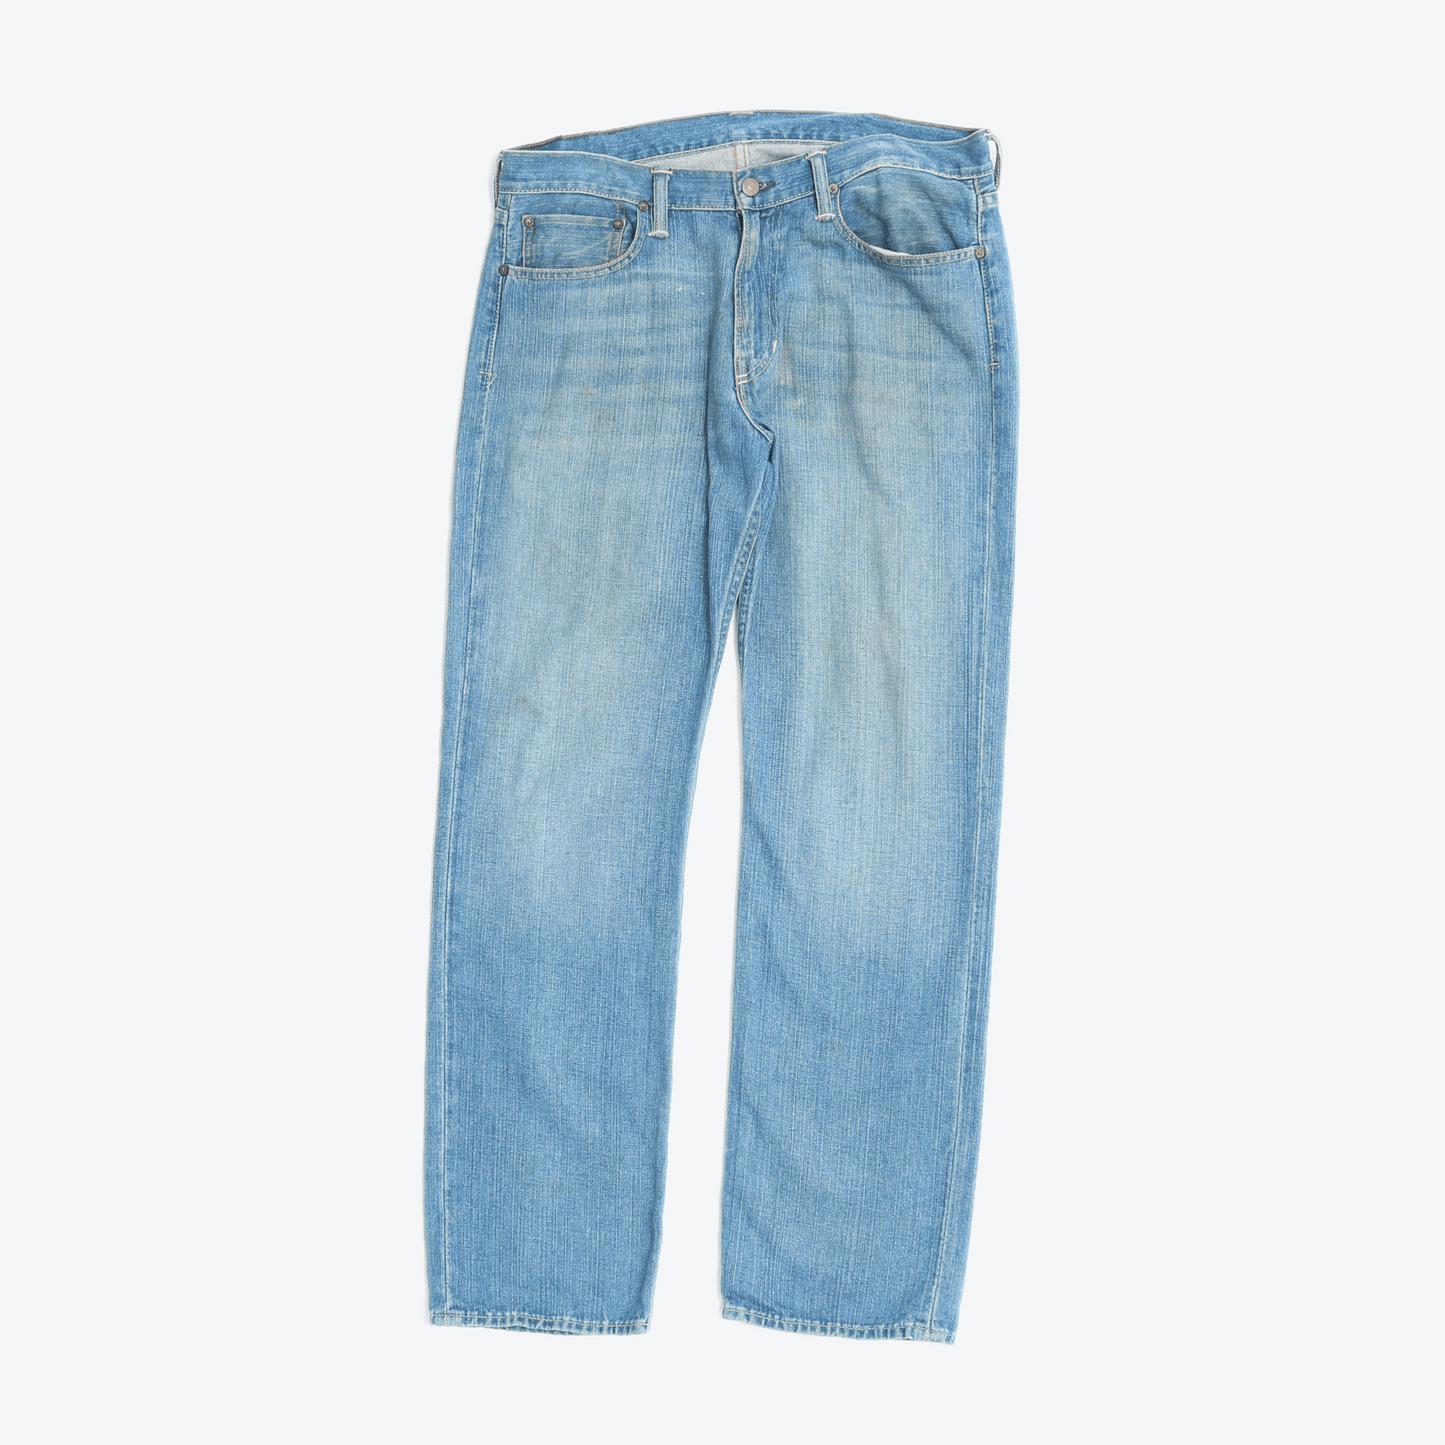 Vintage Denim Jeans - 33x32 - American Madness